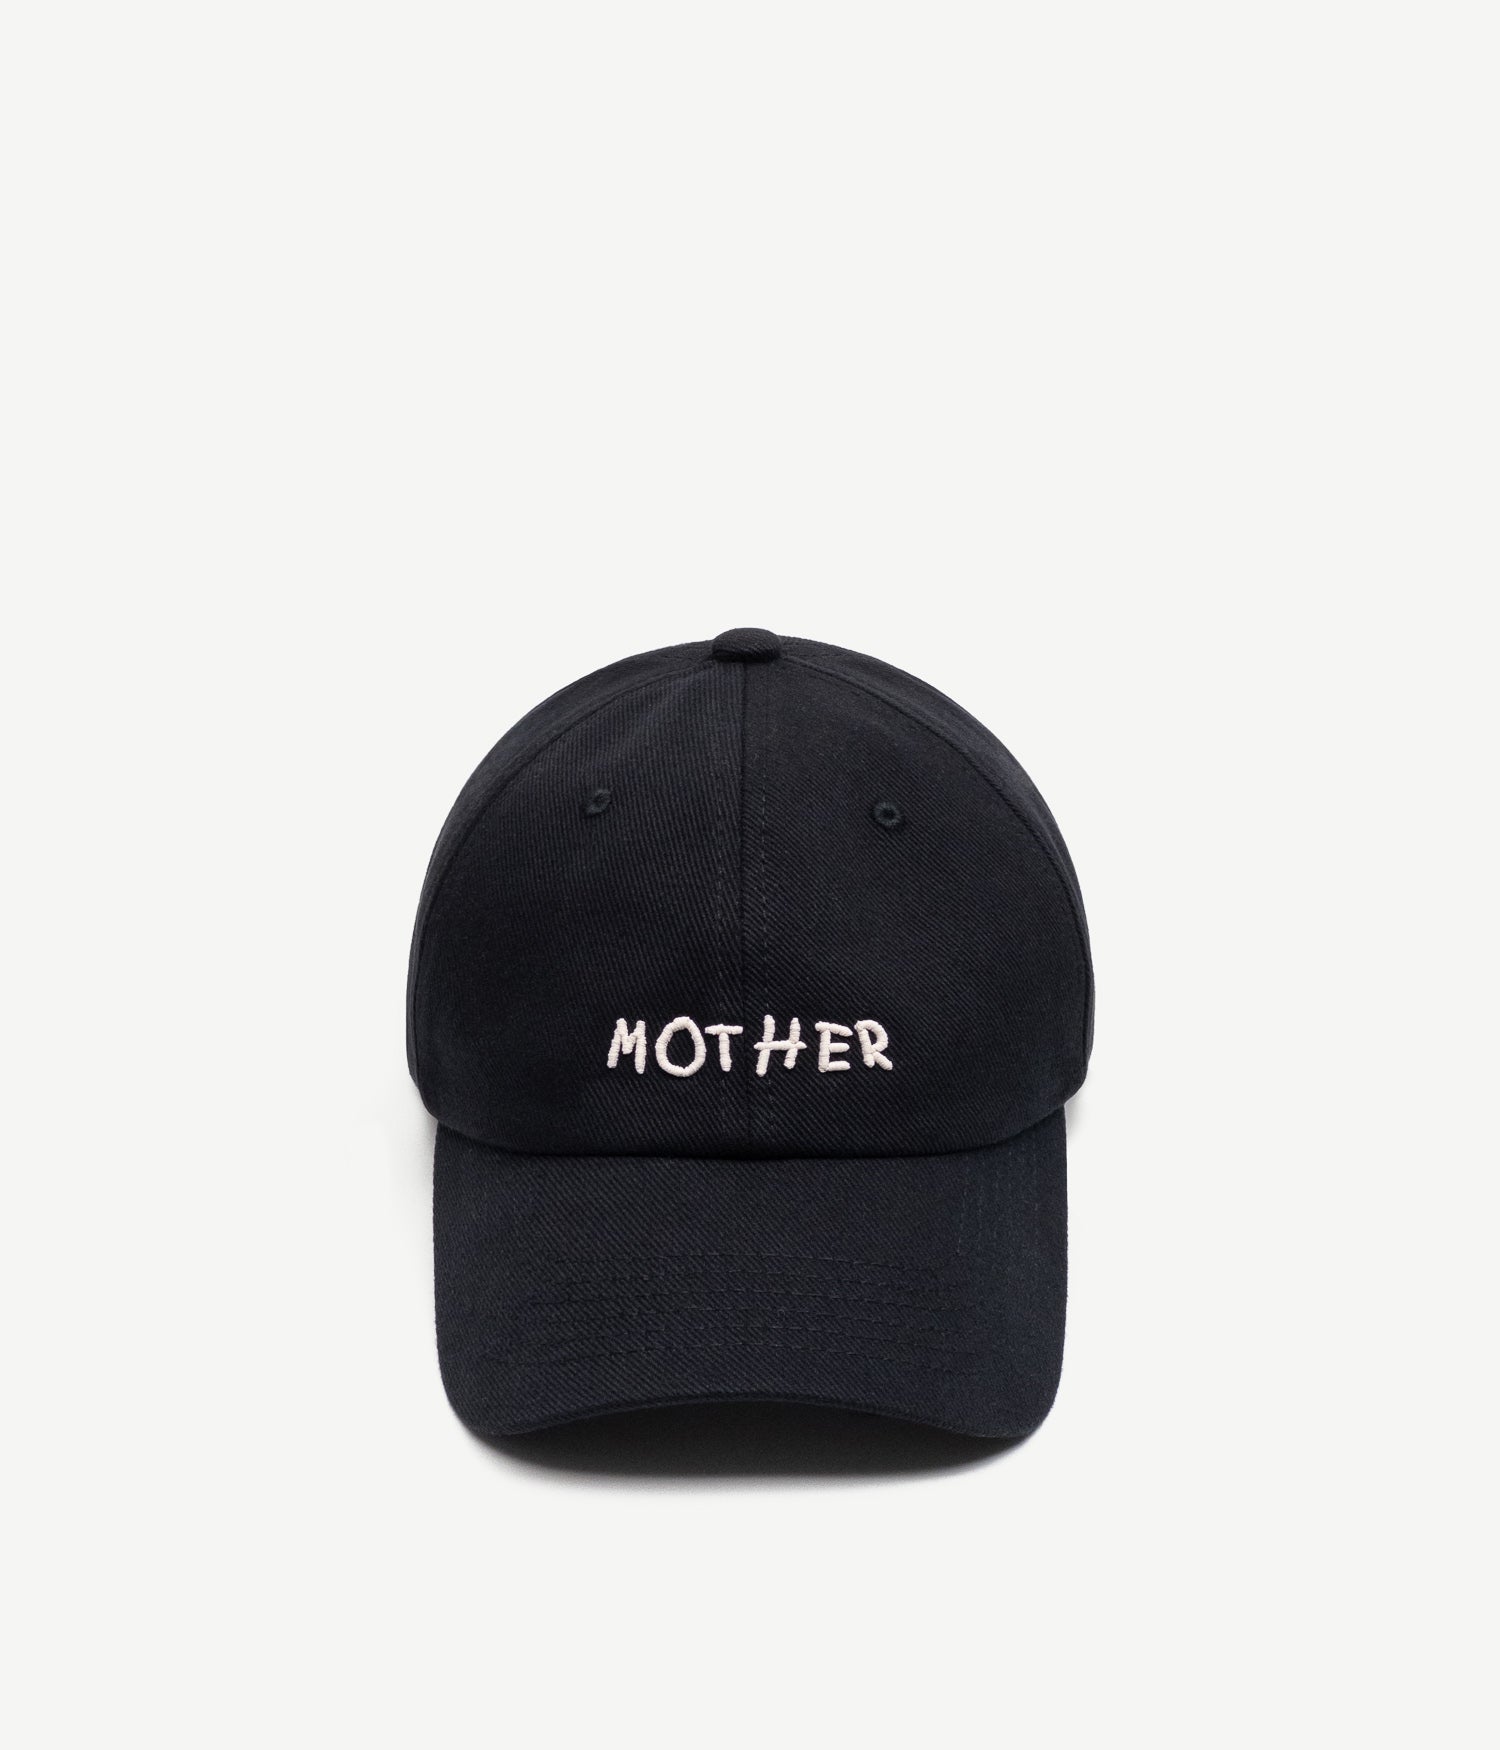 "Mother" Baseball Cap